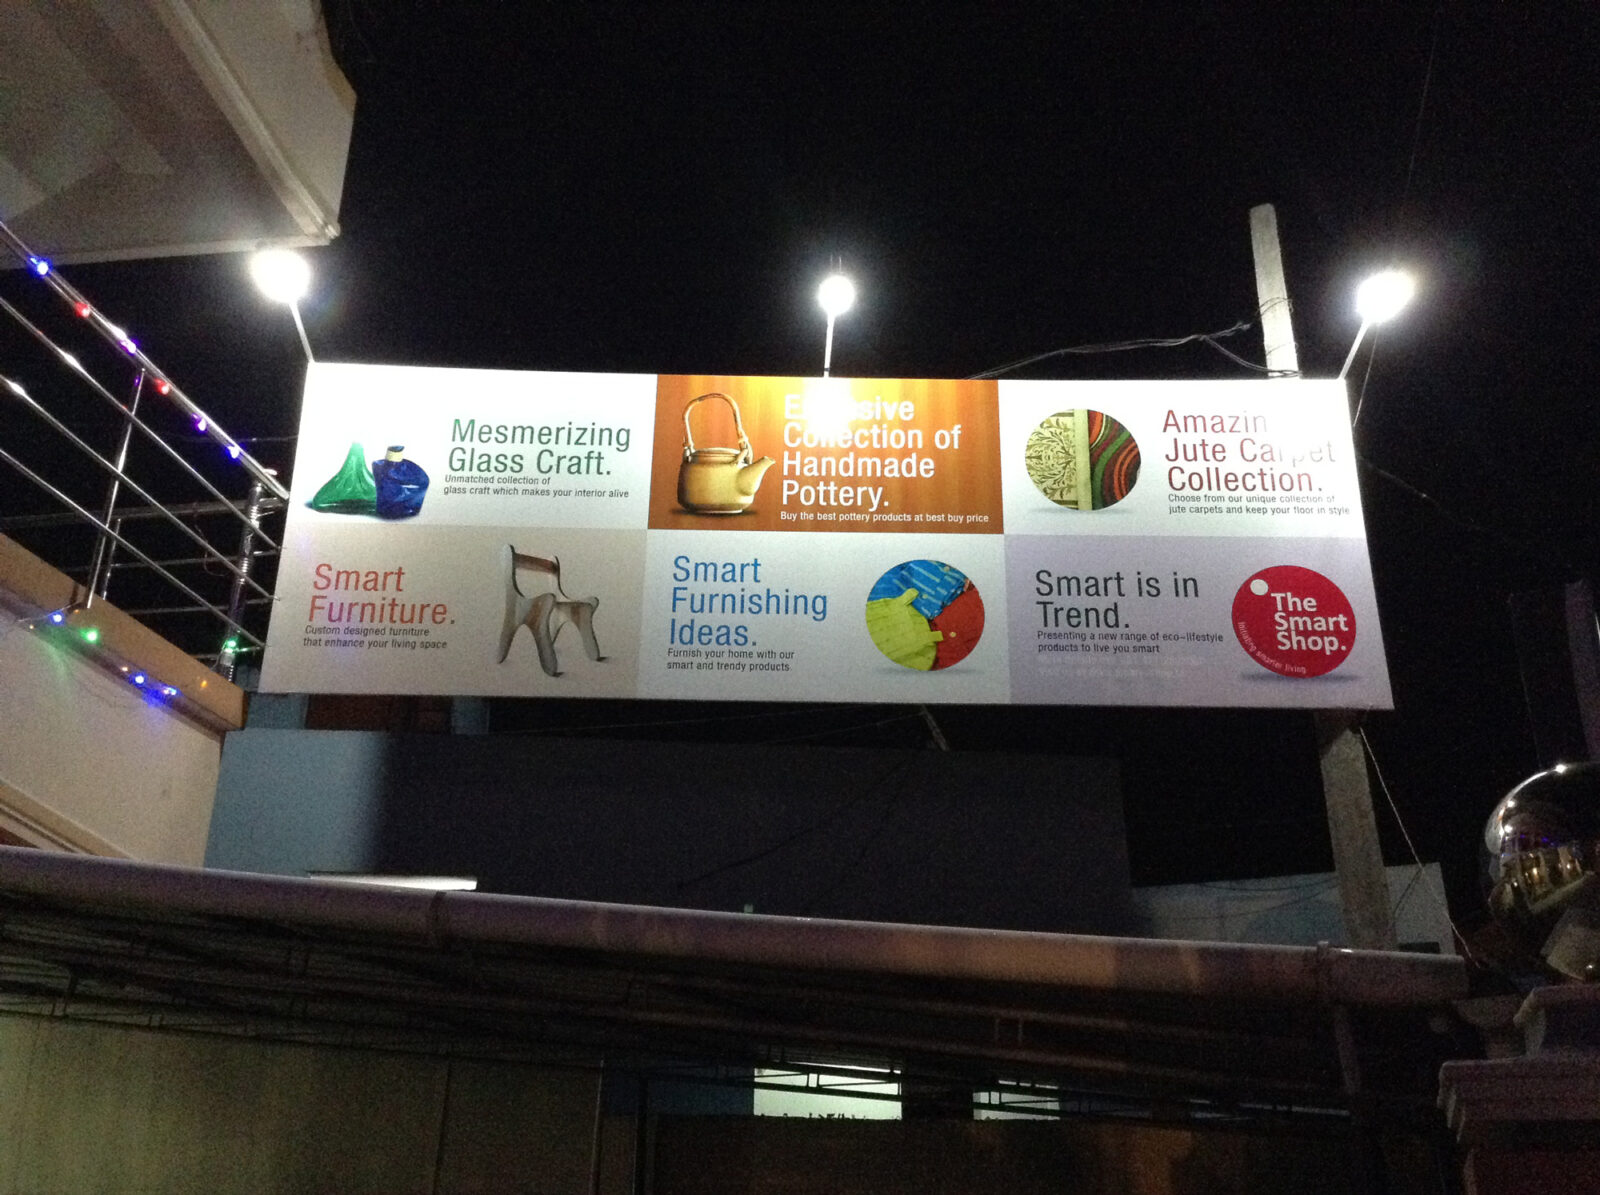 The Smart Shop – billboard design hosted at the shop front.